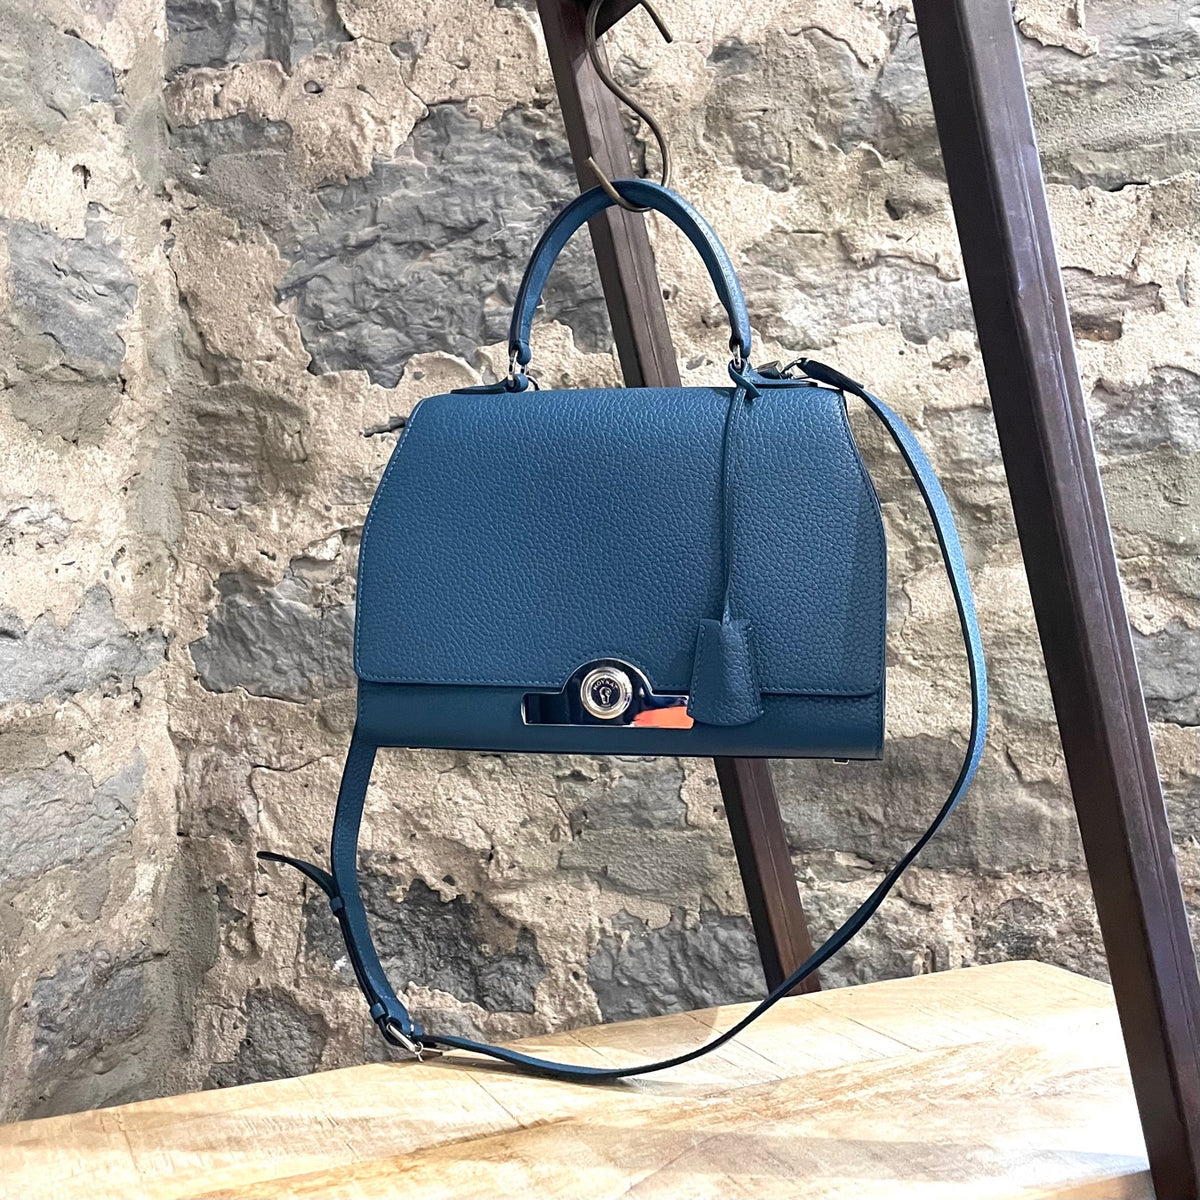 Moynat Pétite Réjane Handbag in Blue